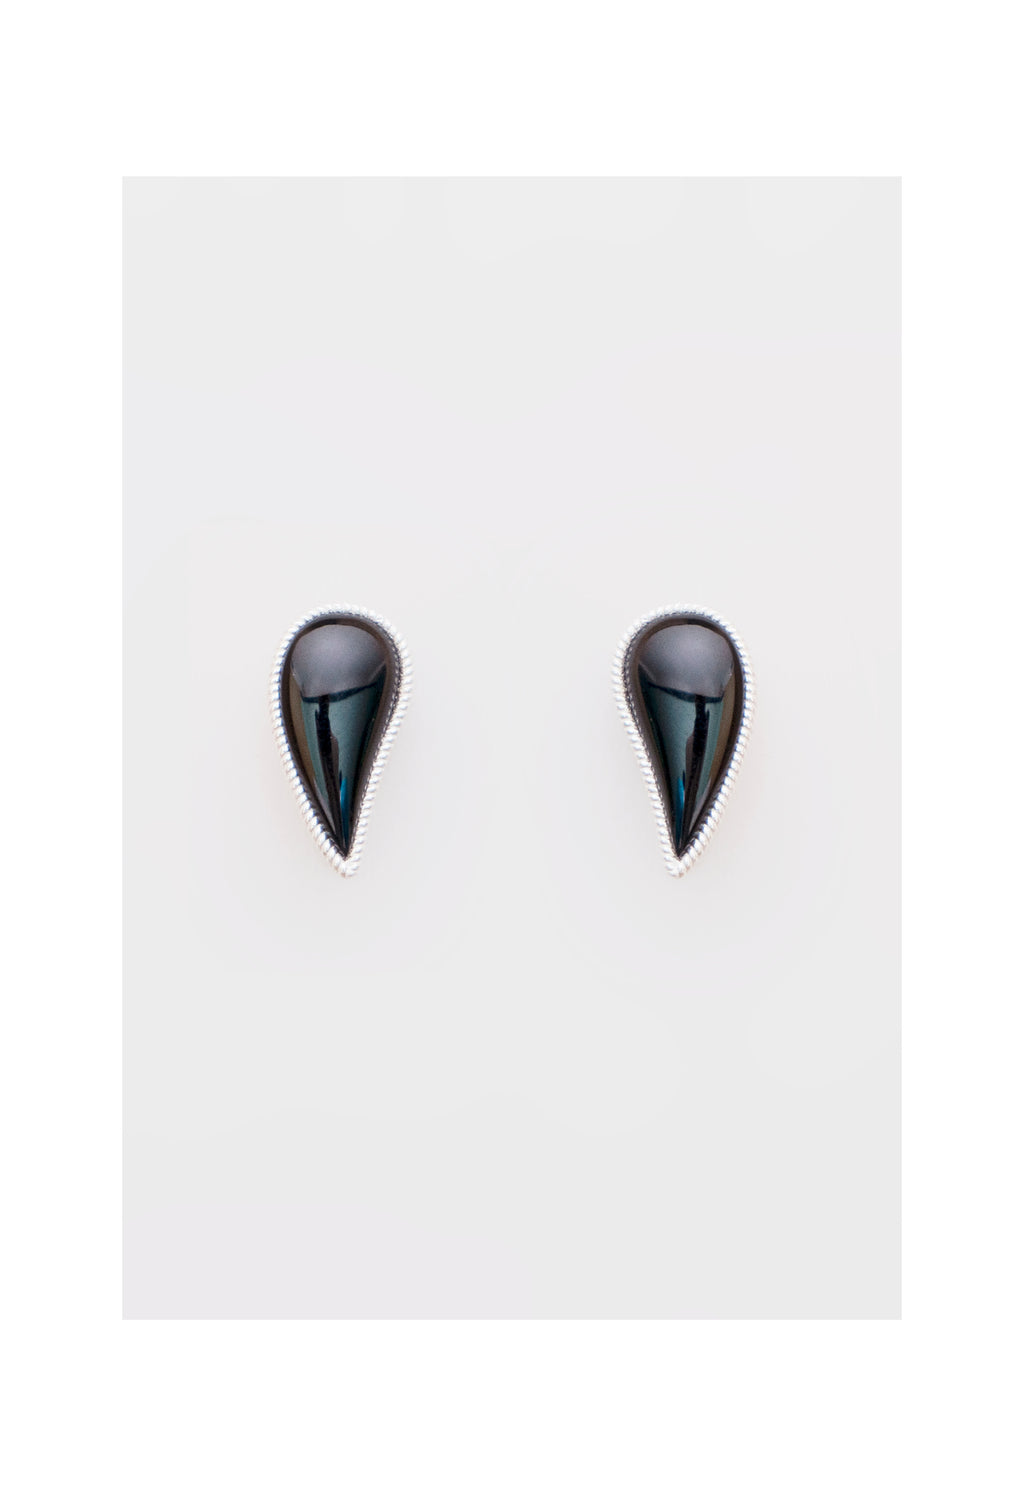 Wing (black) Earrings